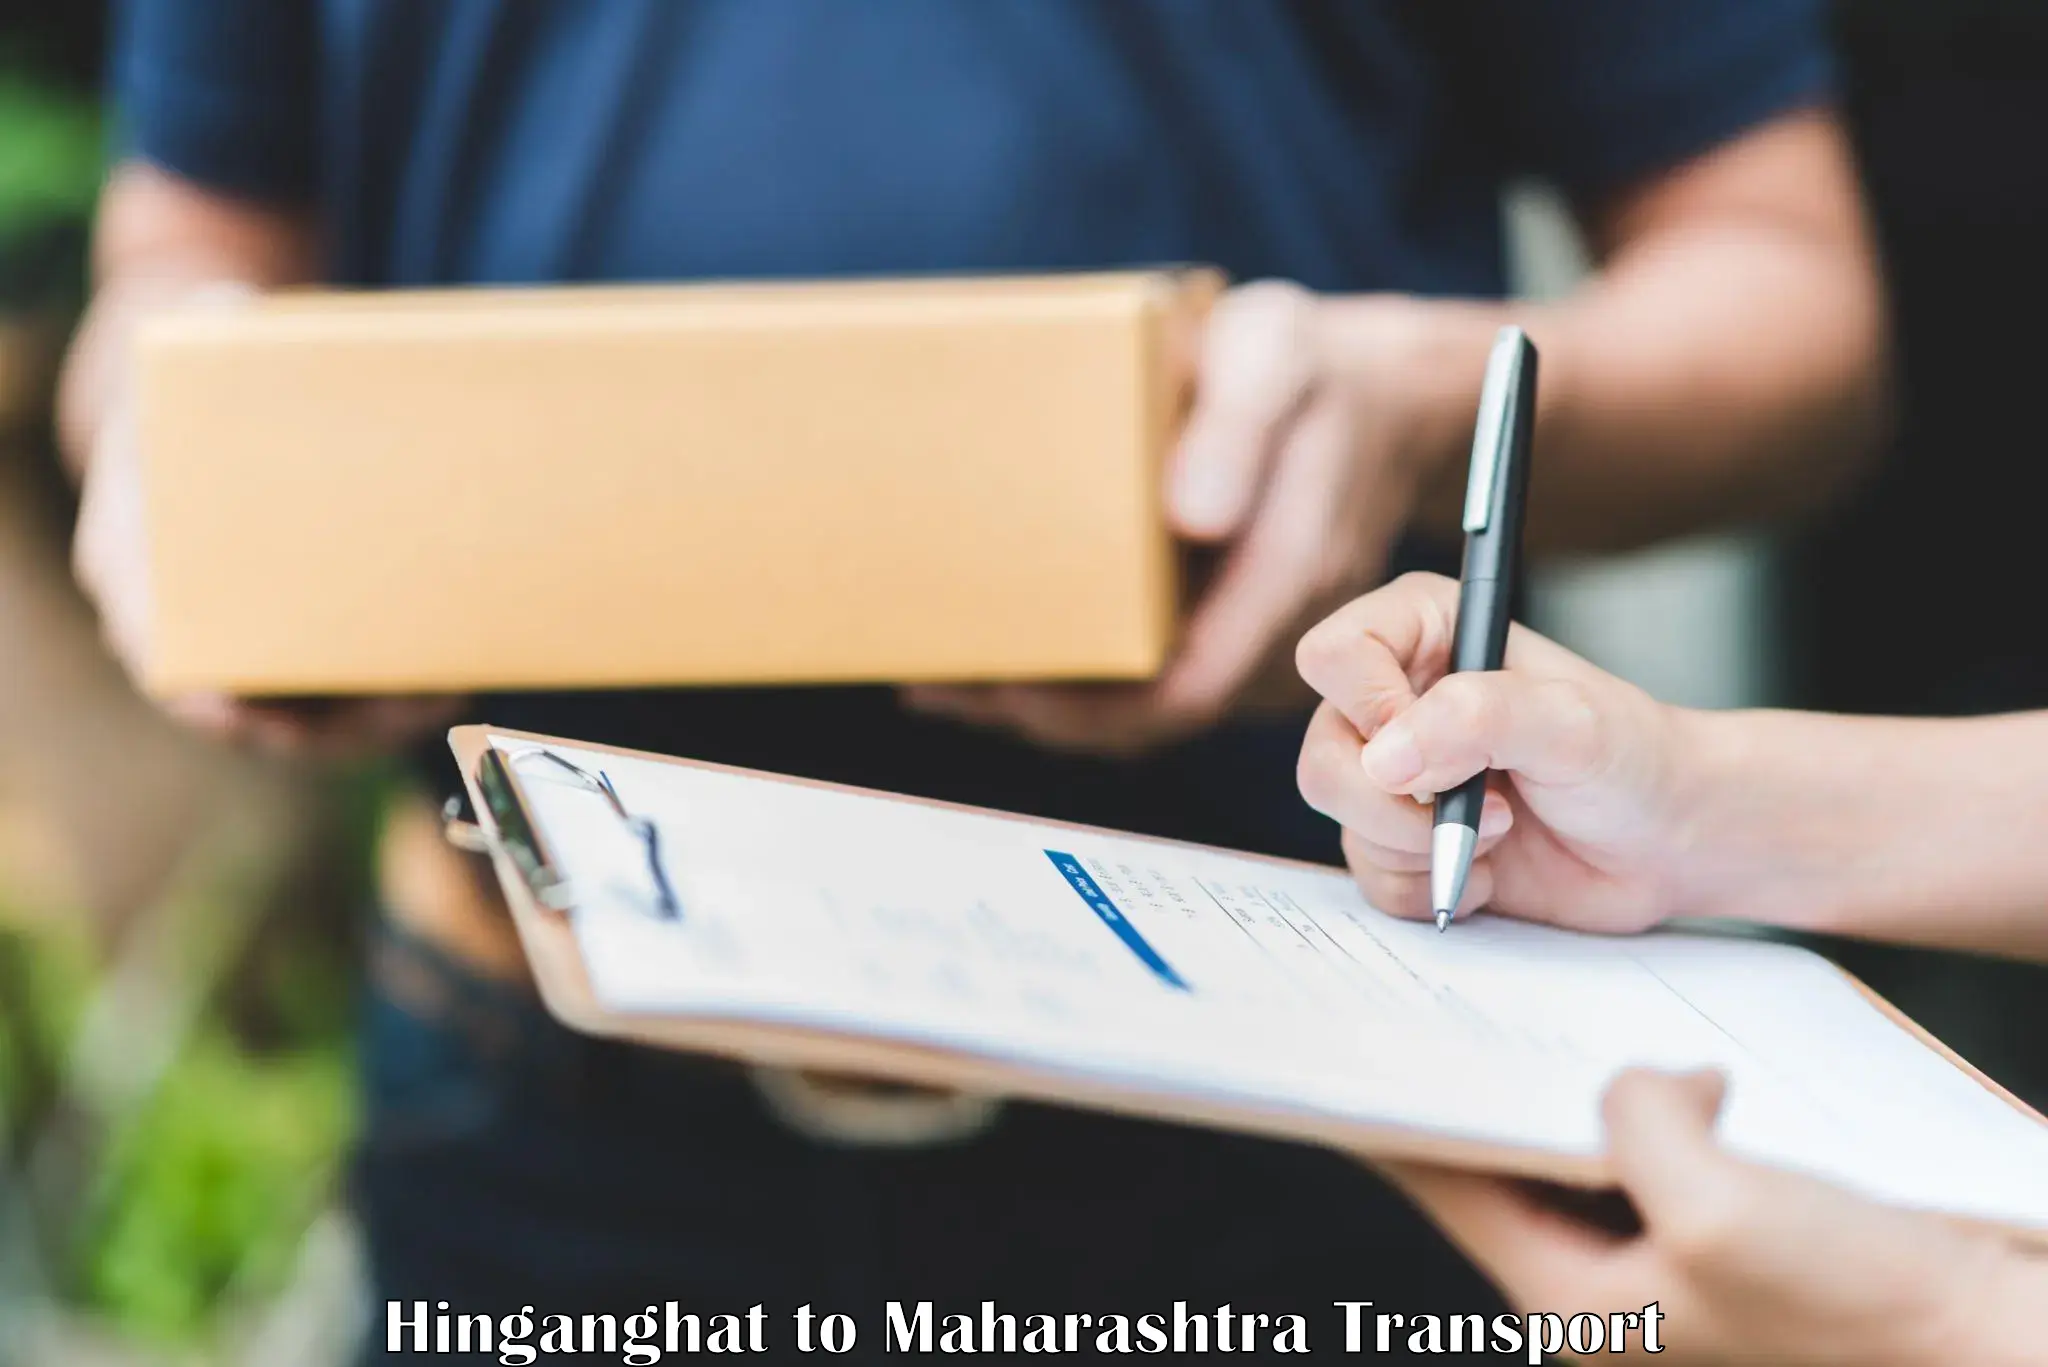 Transport in sharing Hinganghat to Pune